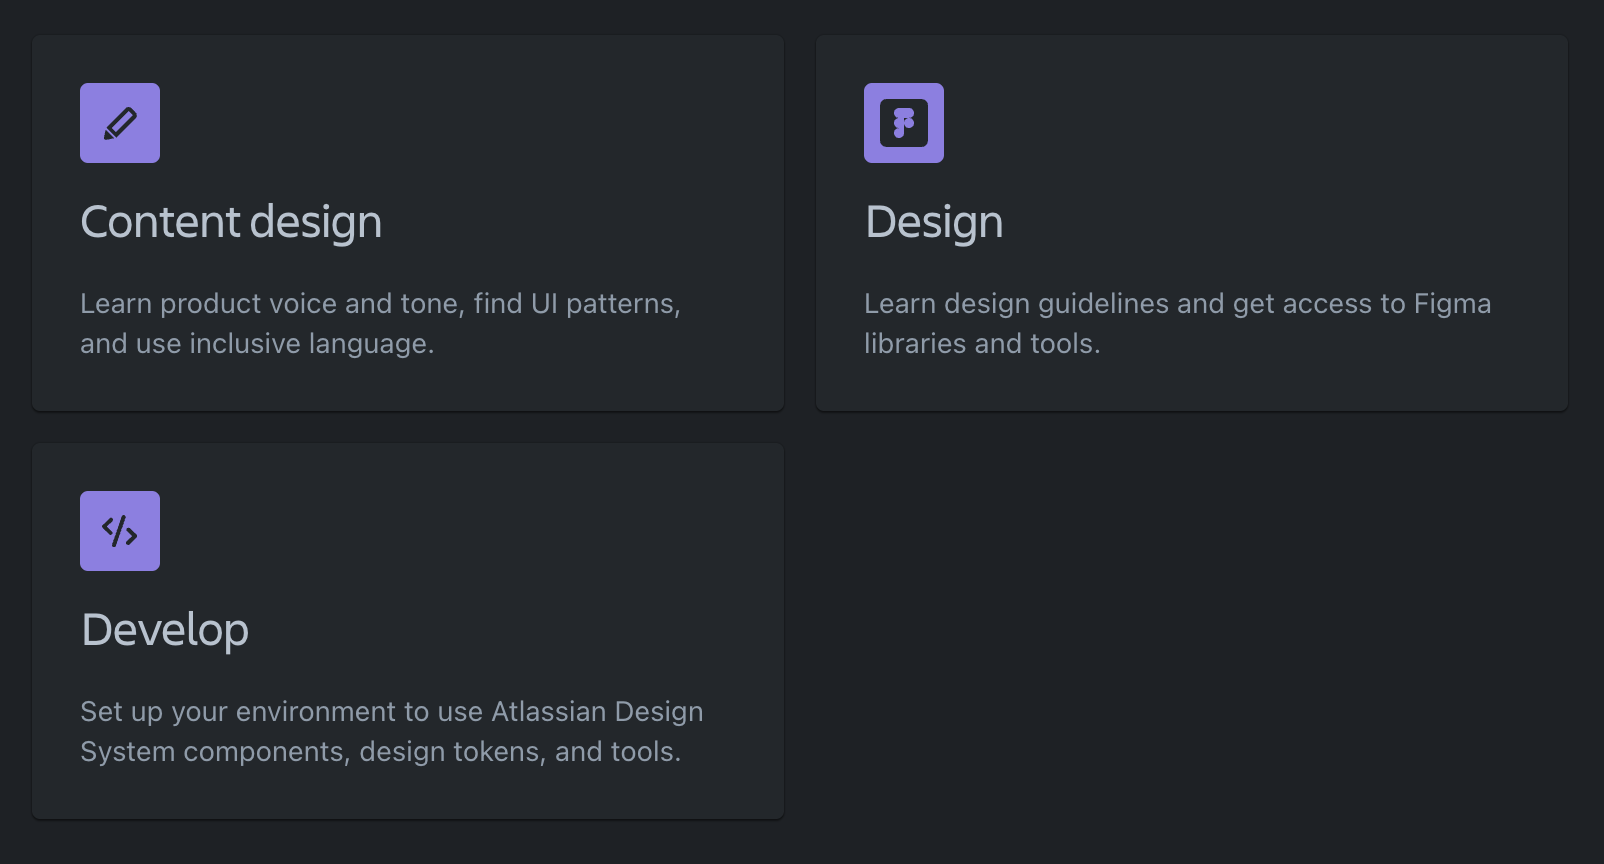 Three sections: content design, design, development